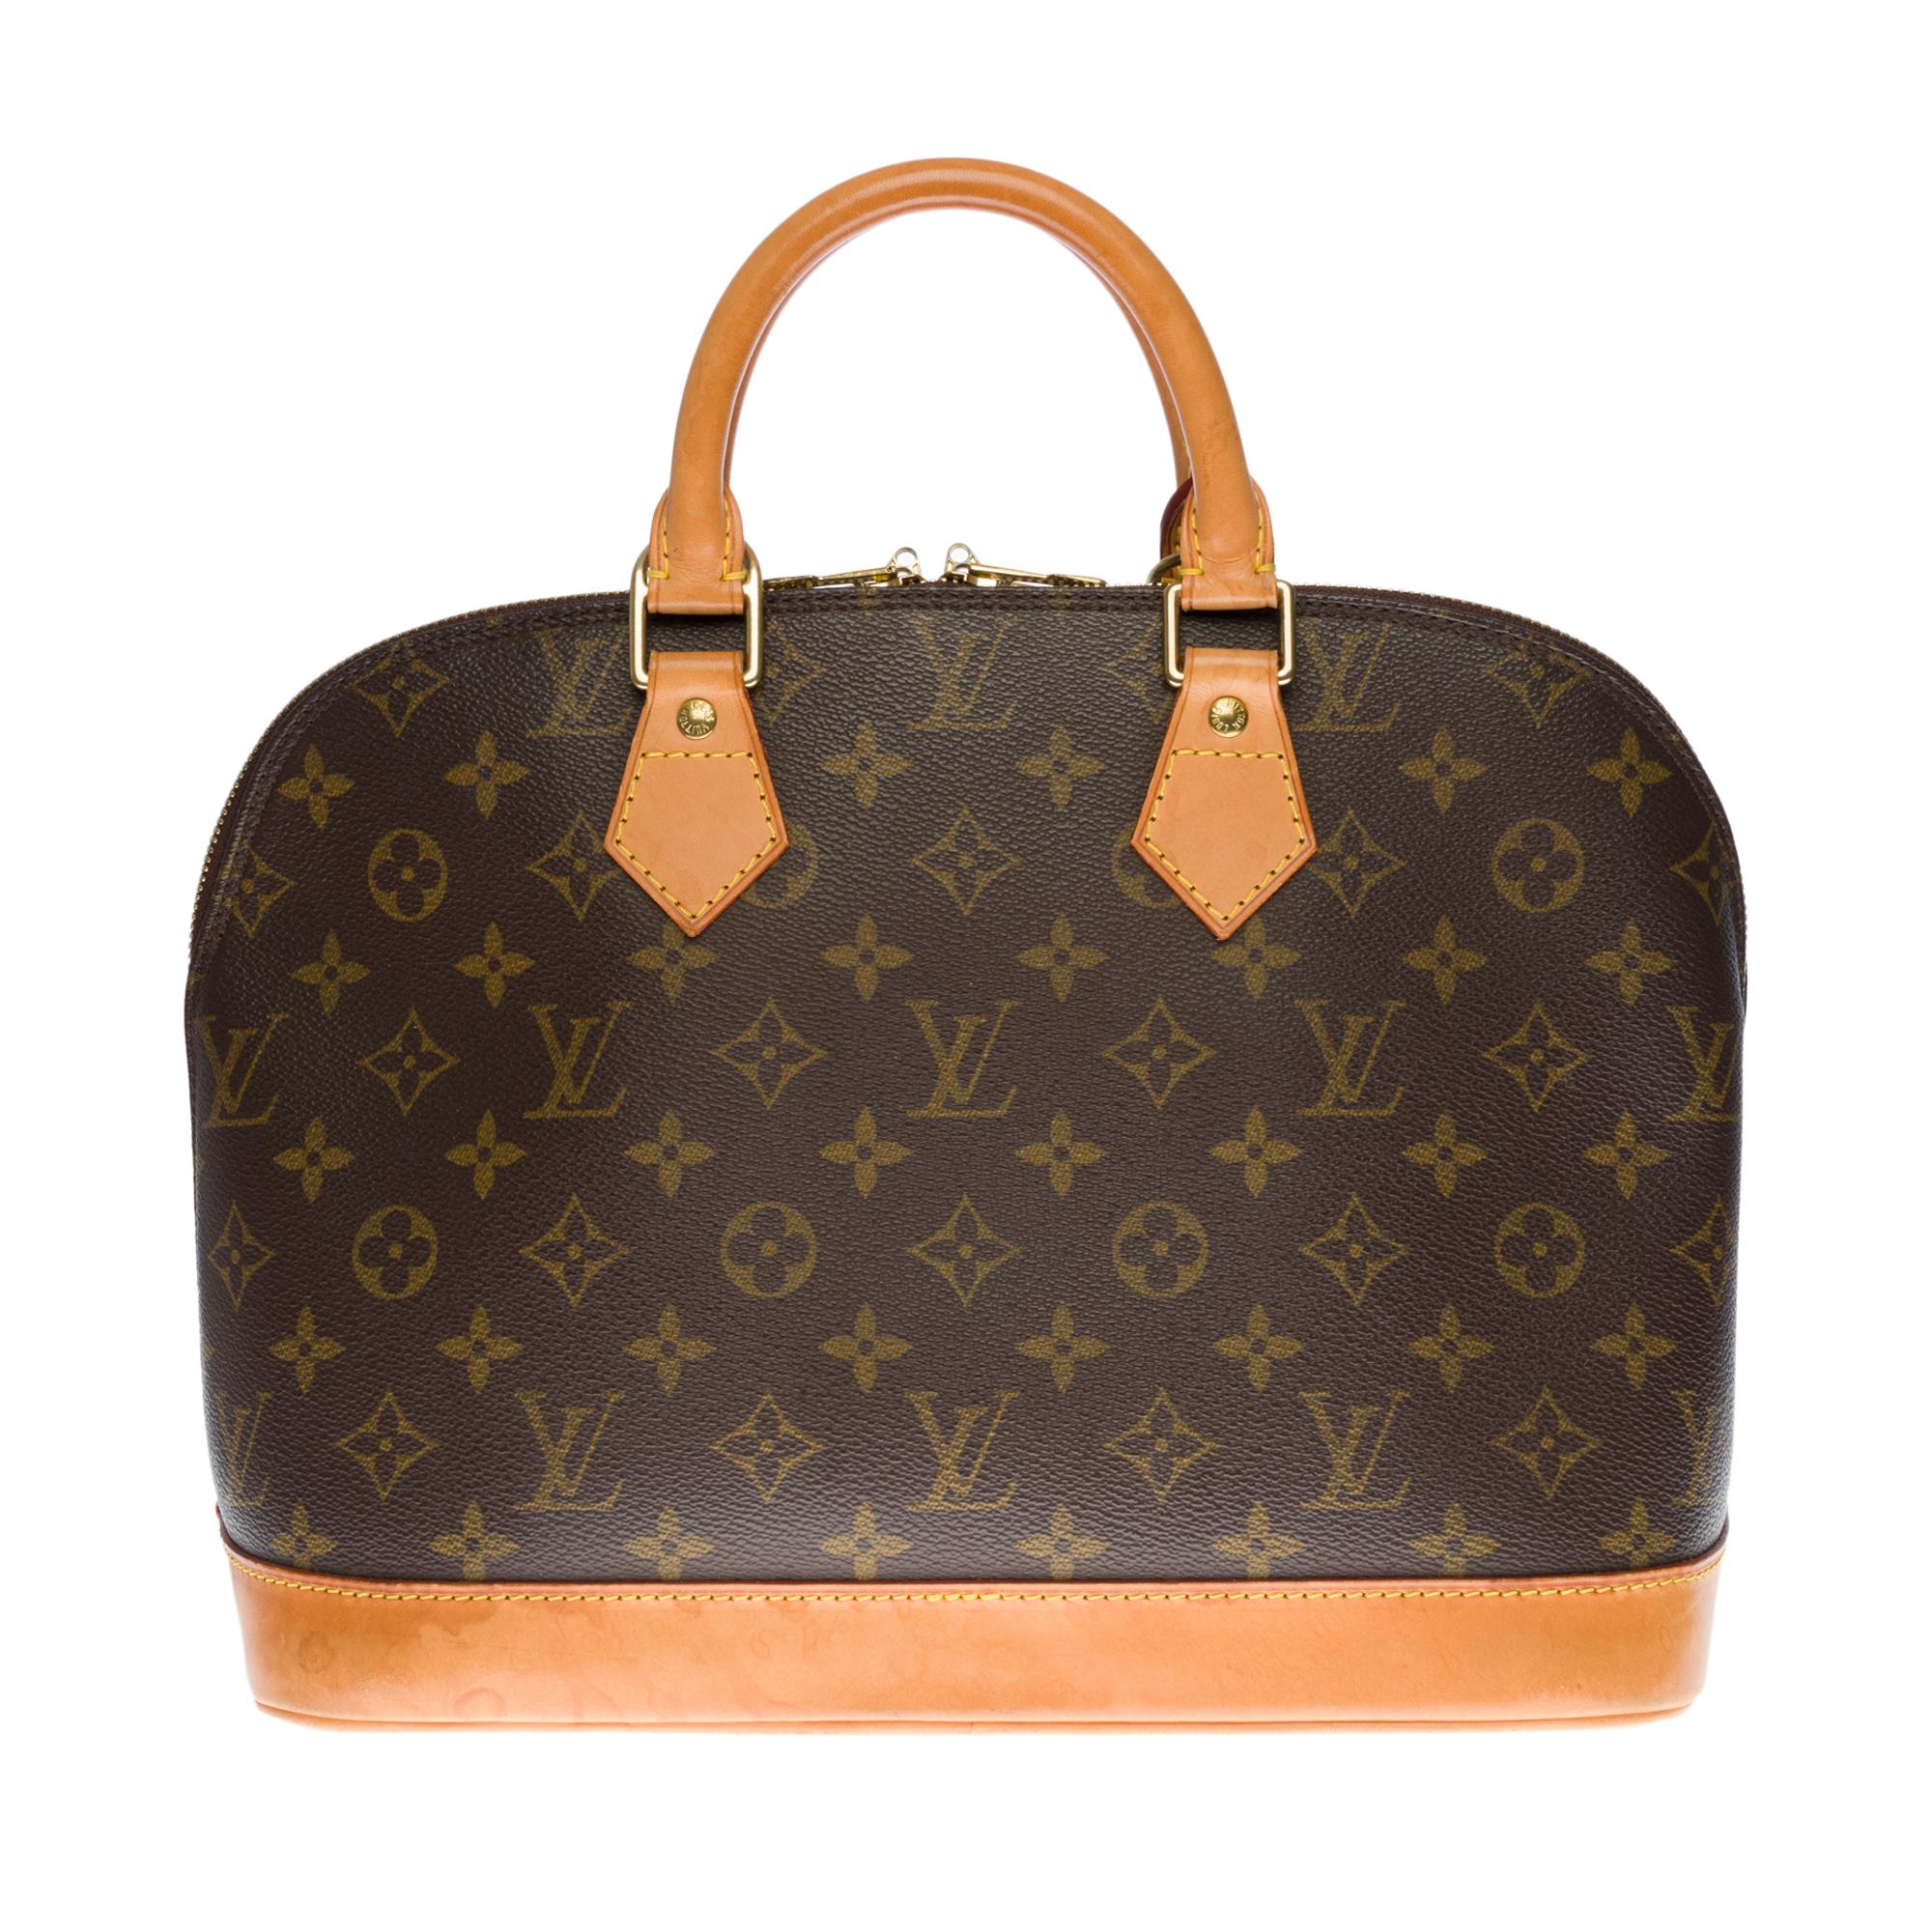 Louis Vuitton Alma MM handbag with strap in brown Monogram canvas at ...